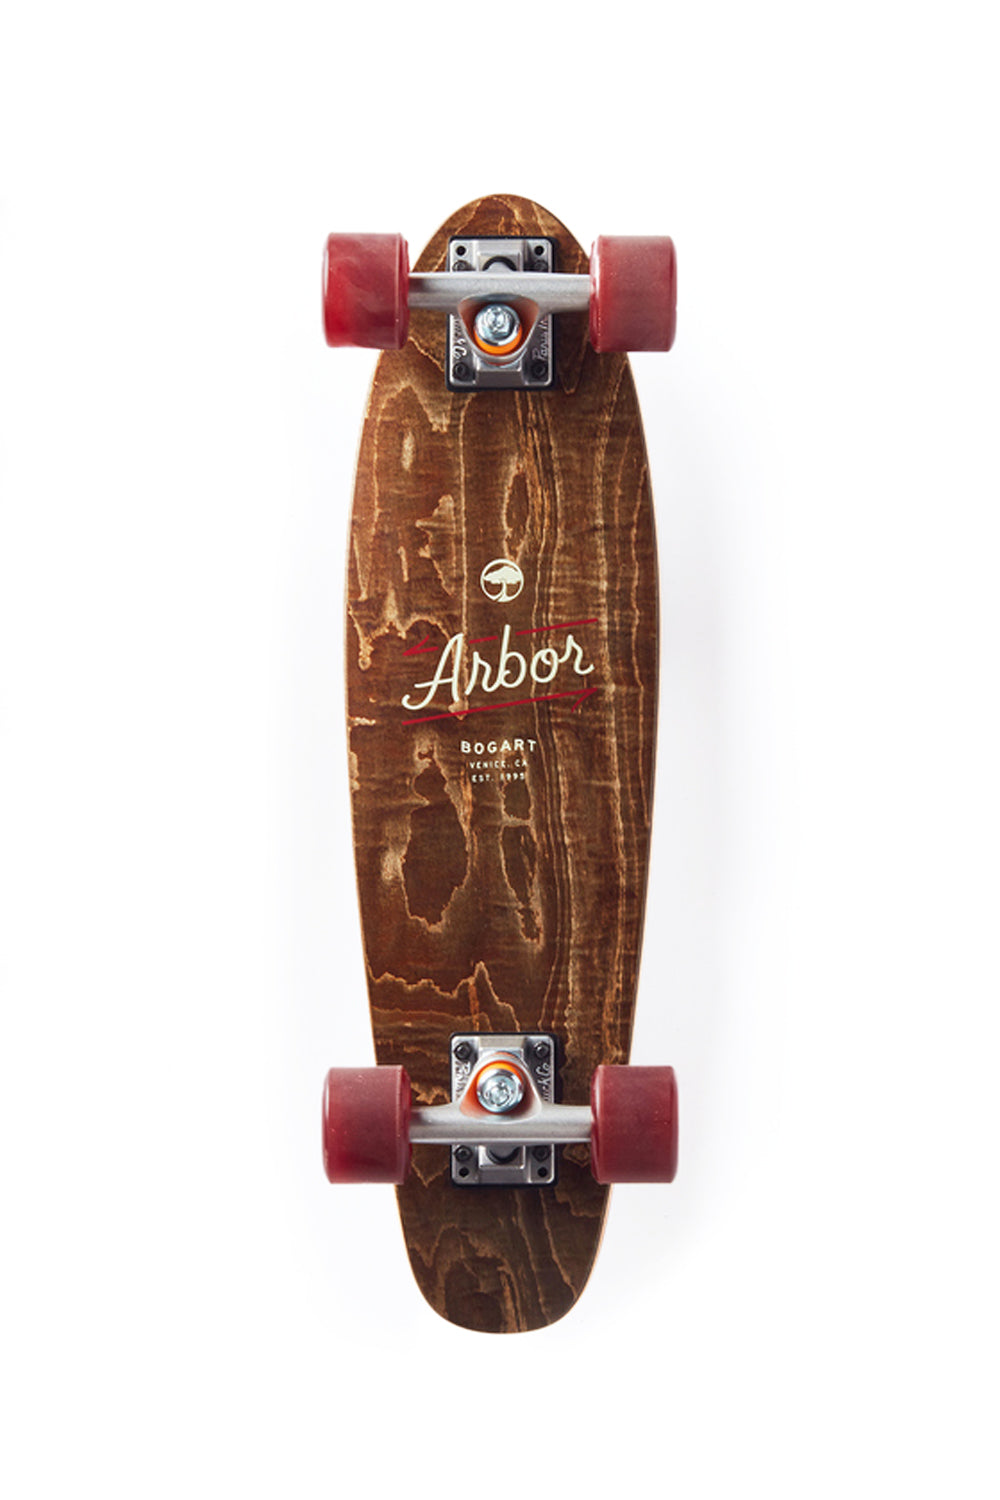 Arbor Micron Cruiser Skateboard